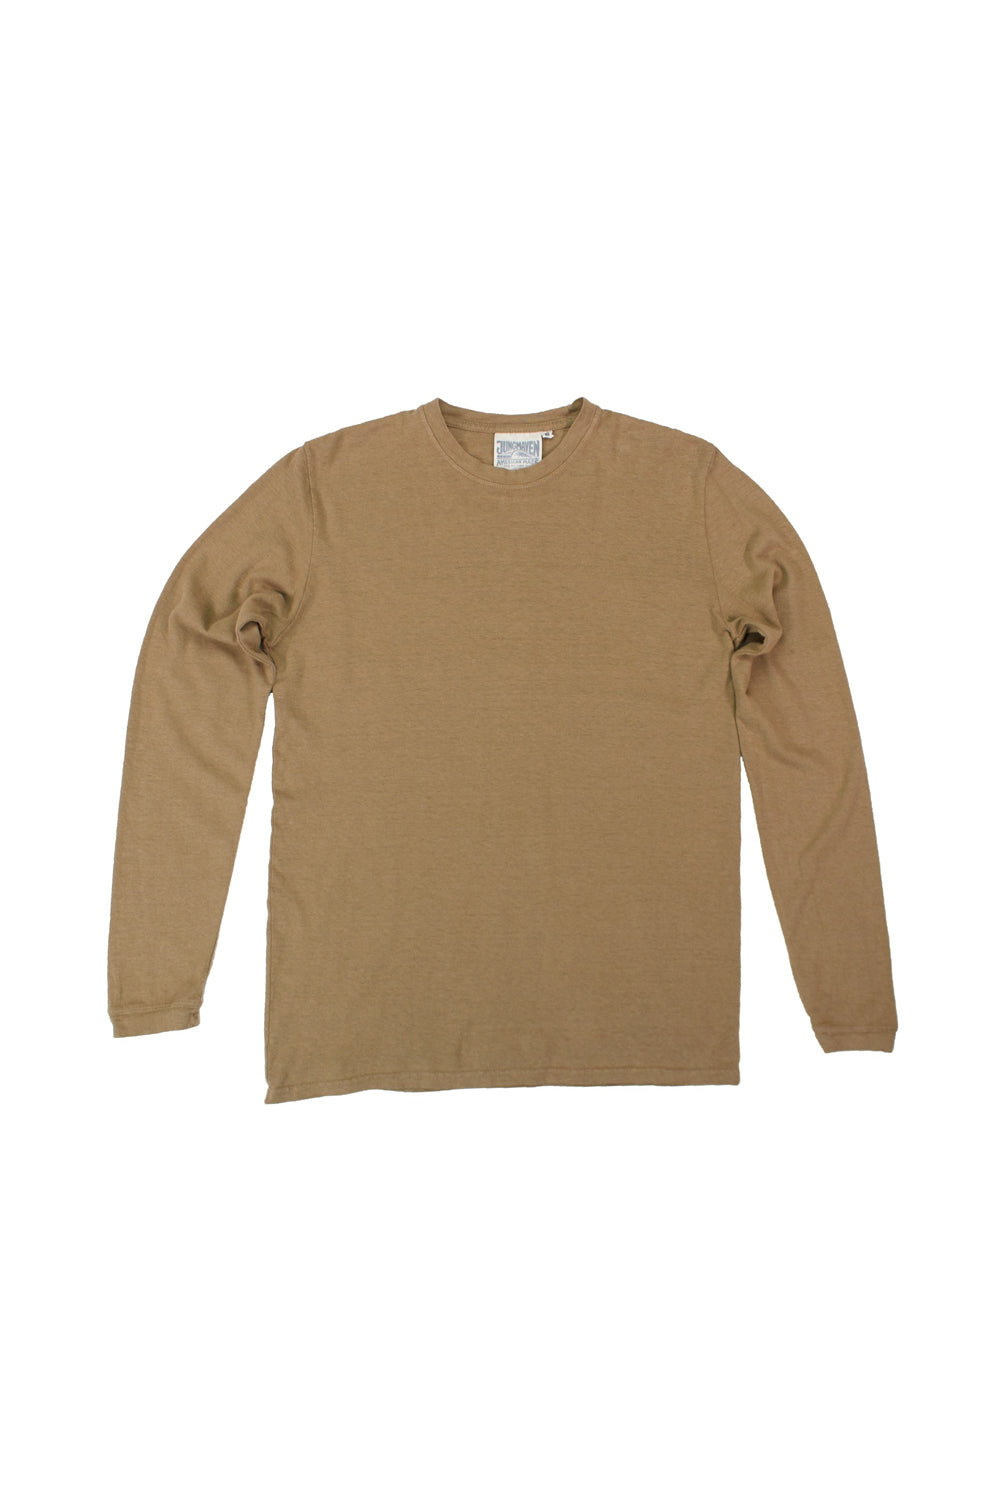 Baja Long Sleeve Hemp Shirt | Jungmaven Hemp Clothing